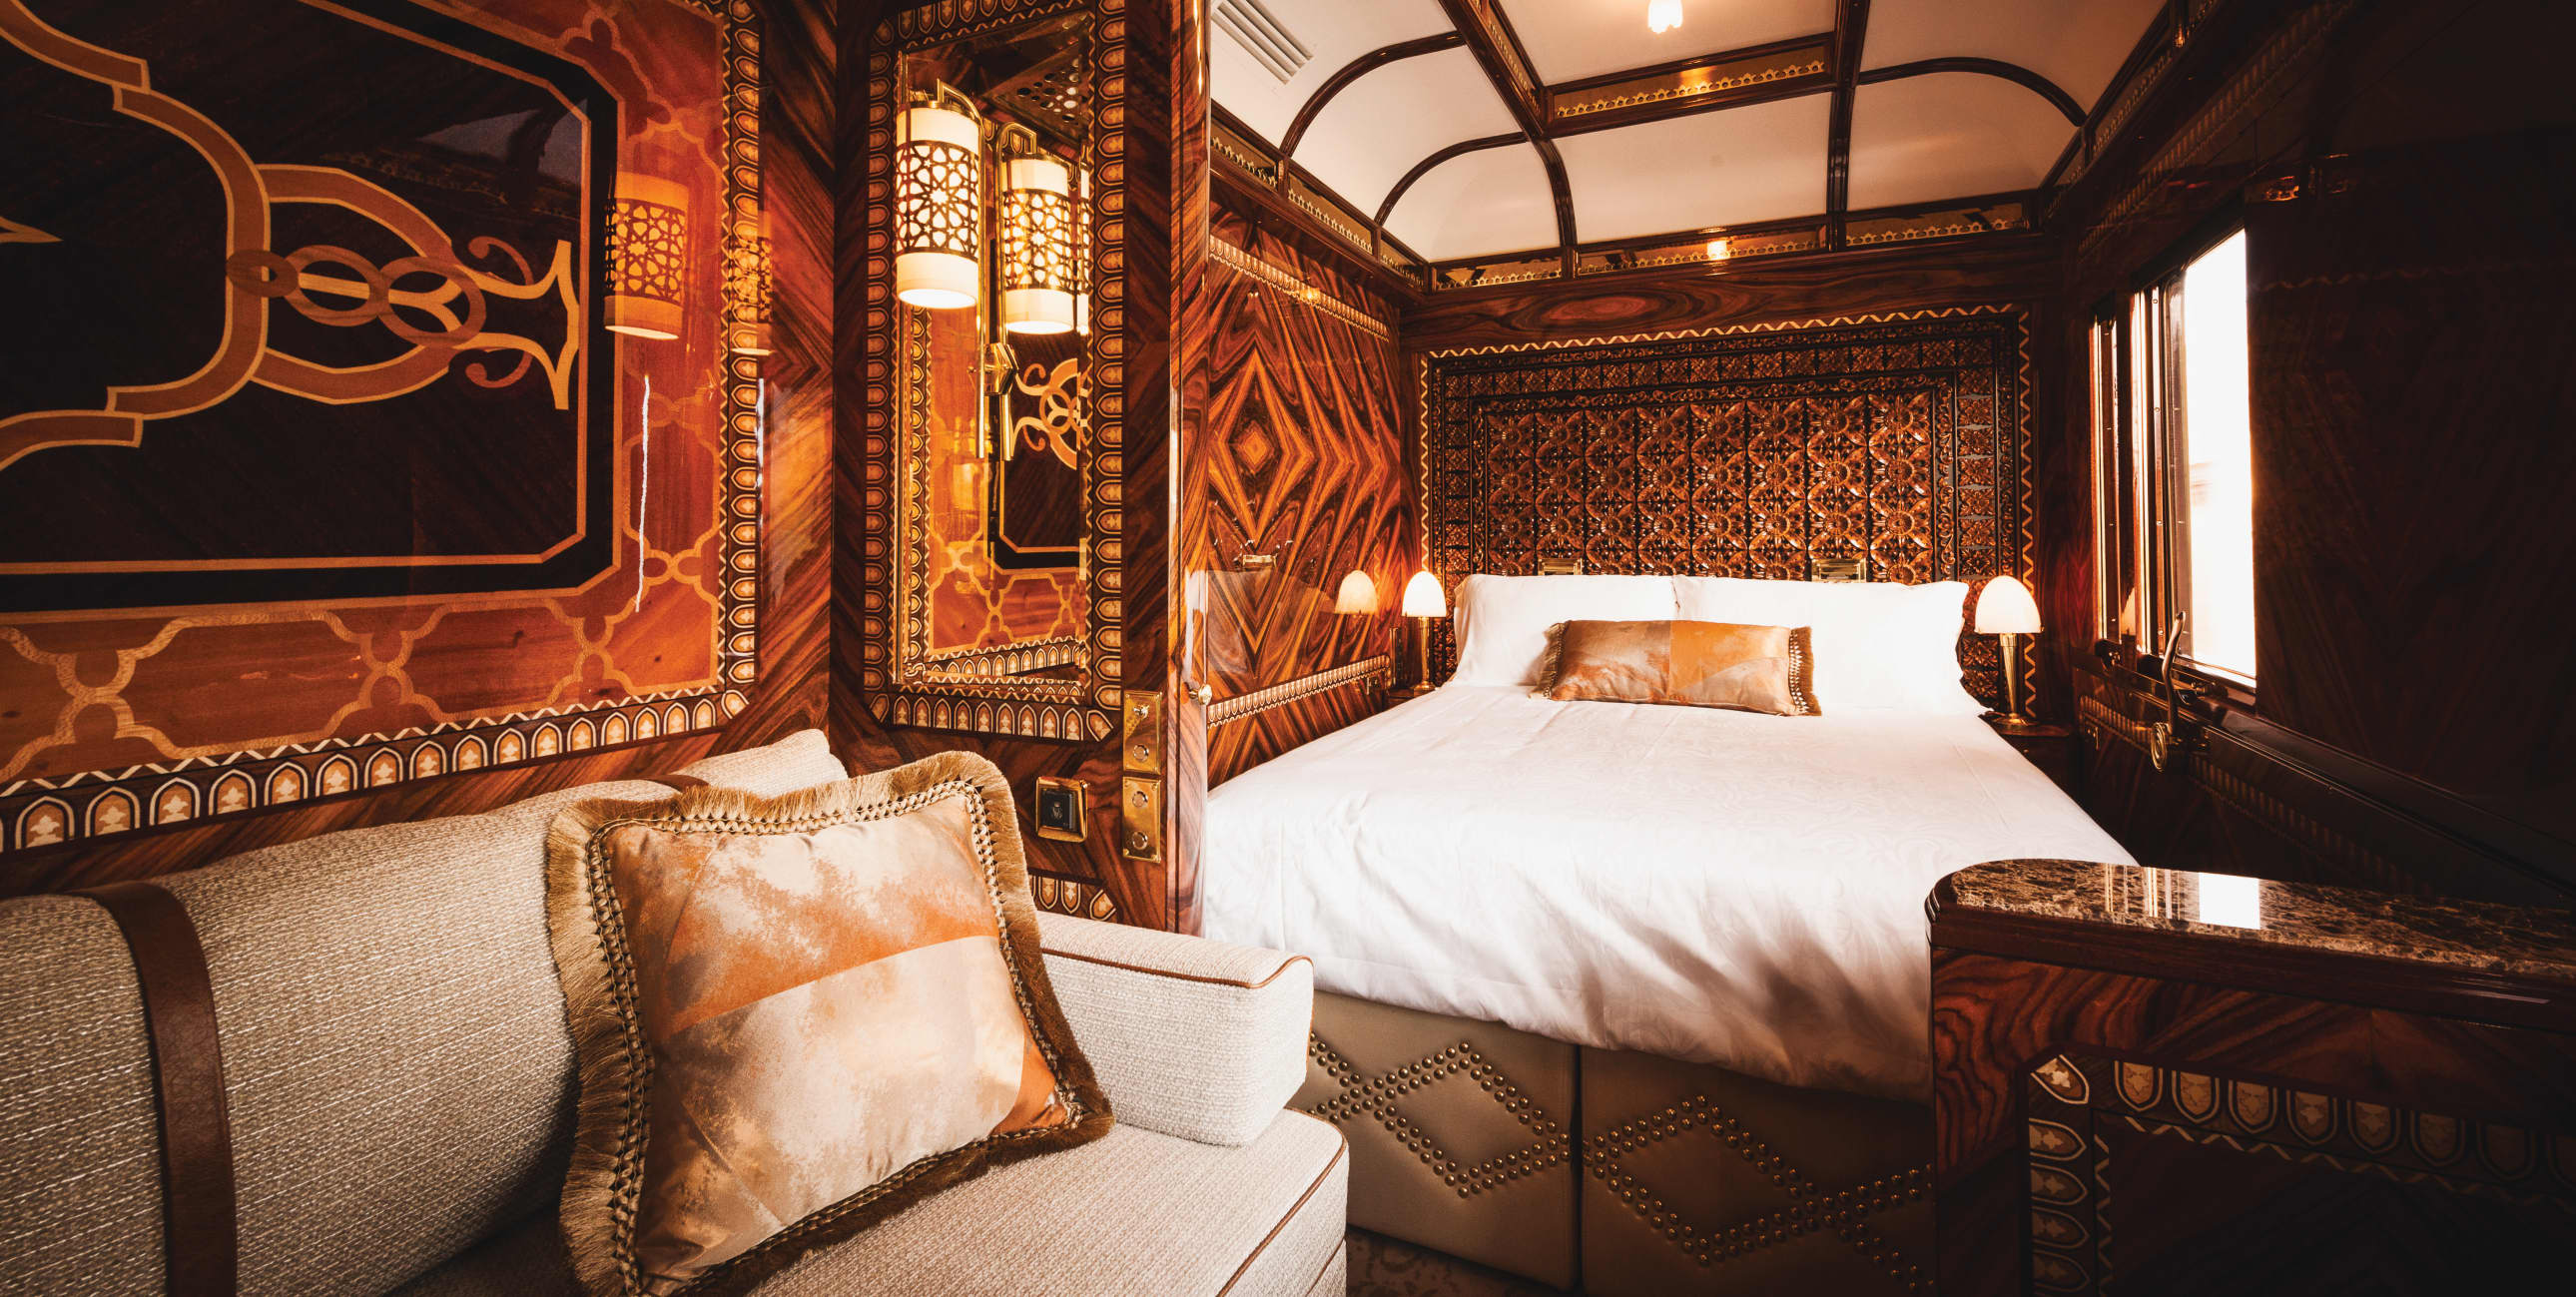 Istanbul Grand Suite Venice Simplon Orient Express Luxury Train